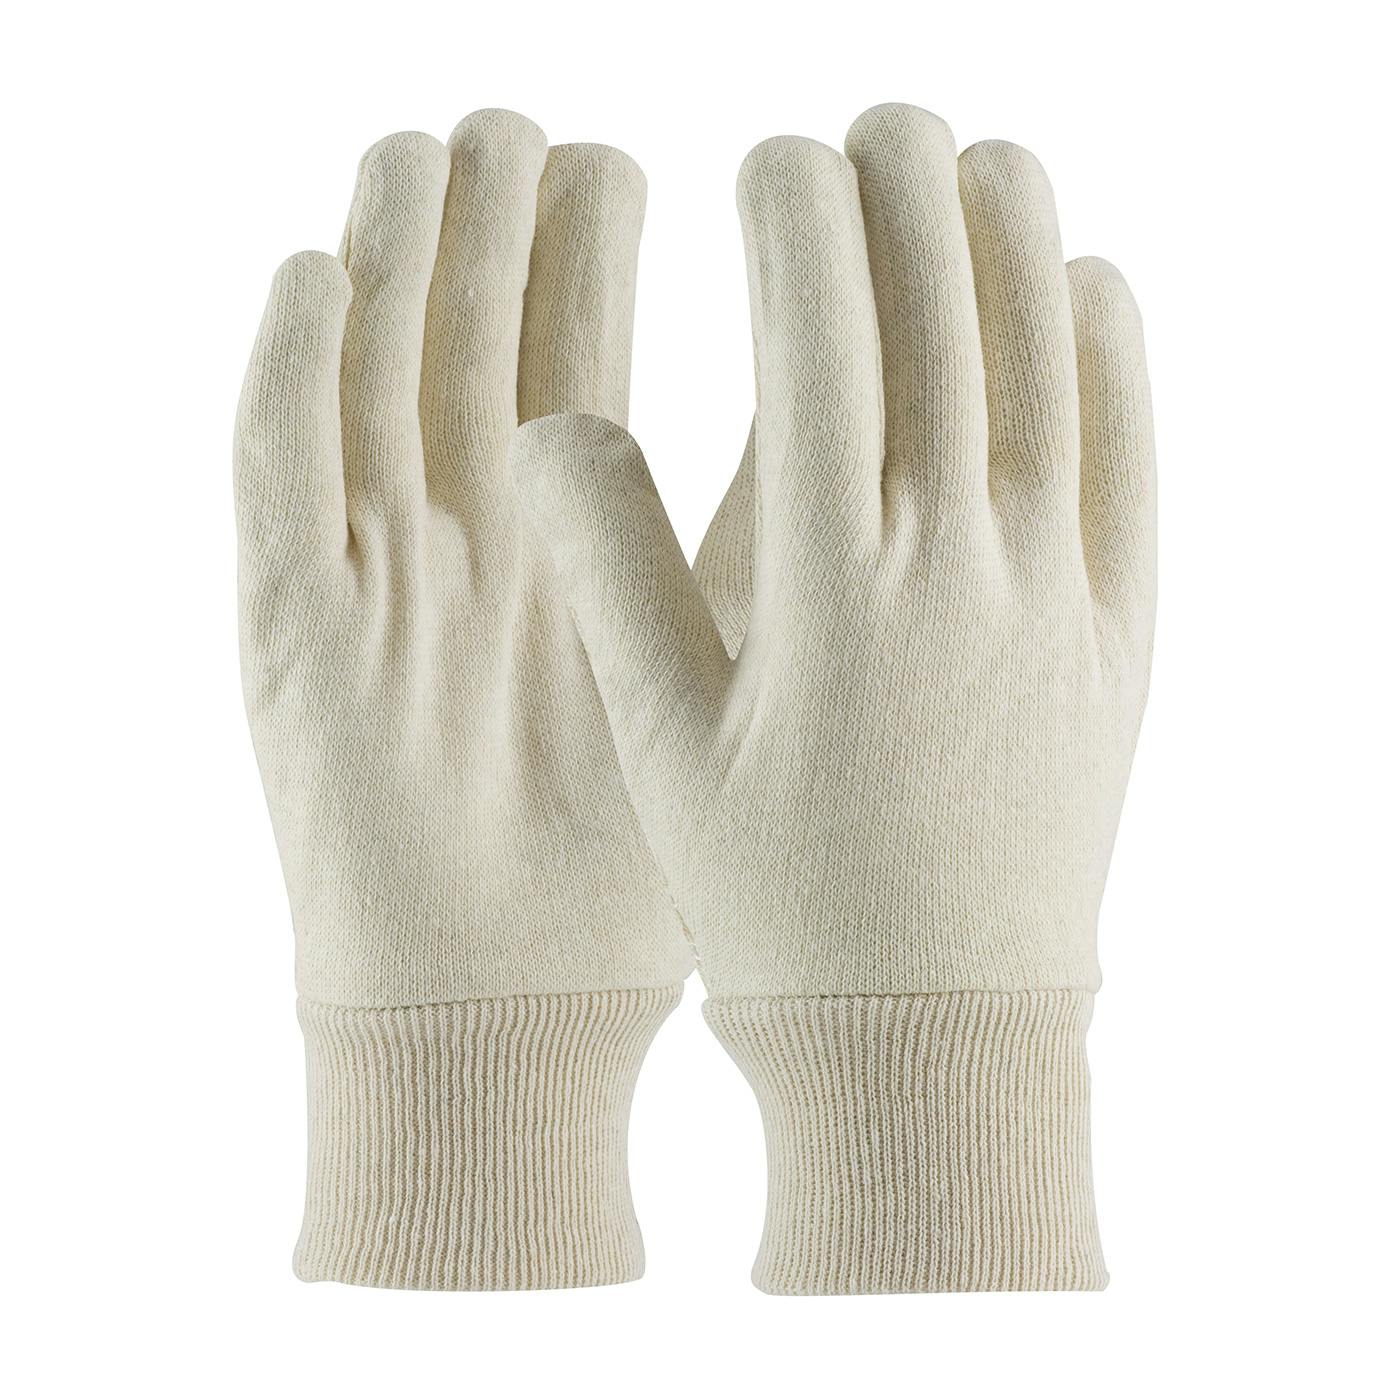 Economy Weight Cotton Reversible Jersey Glove - Men's, Natural (KJ55I) - MENS